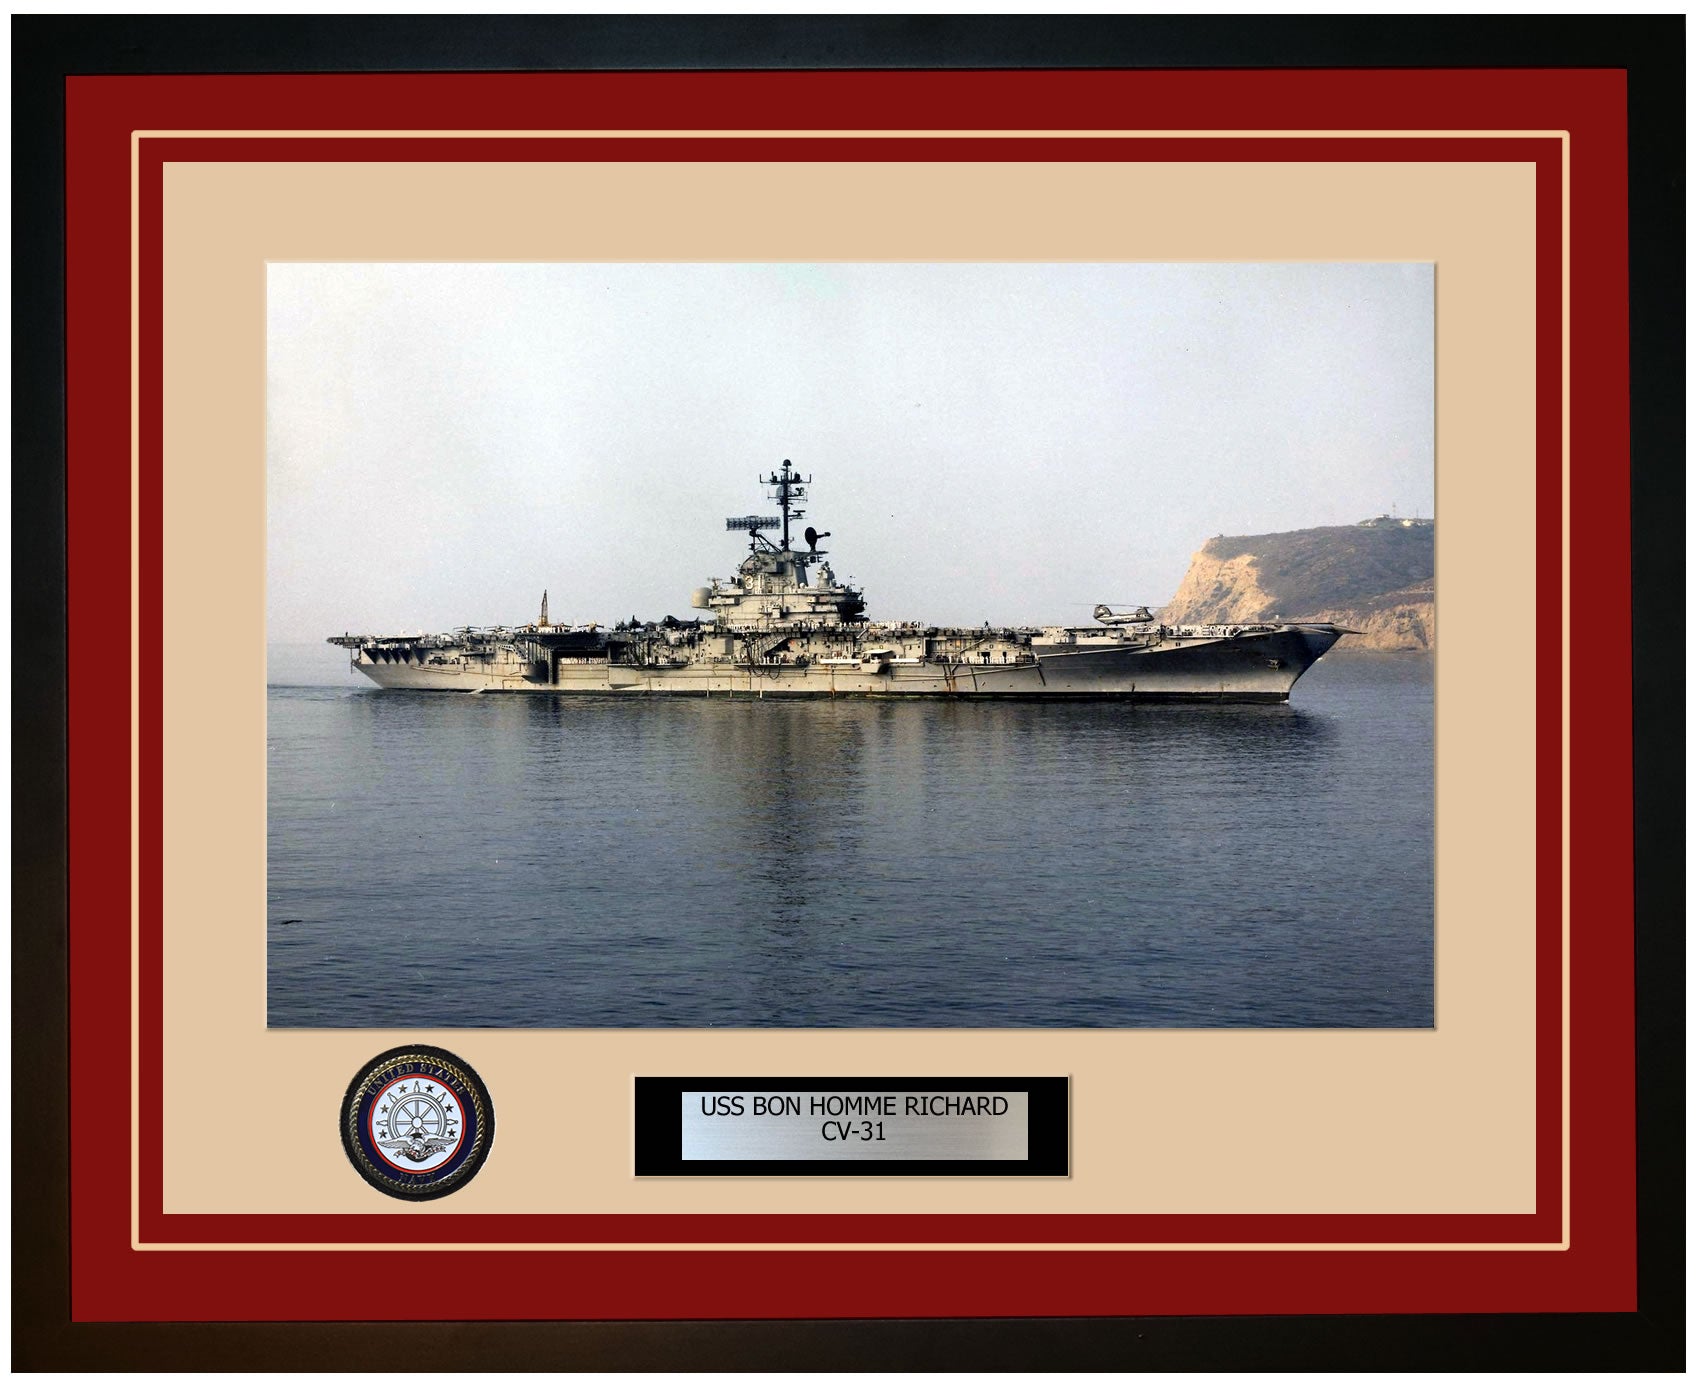 USS BON HOMME RICHARD CV-31 Framed Navy Ship Photo Burgundy